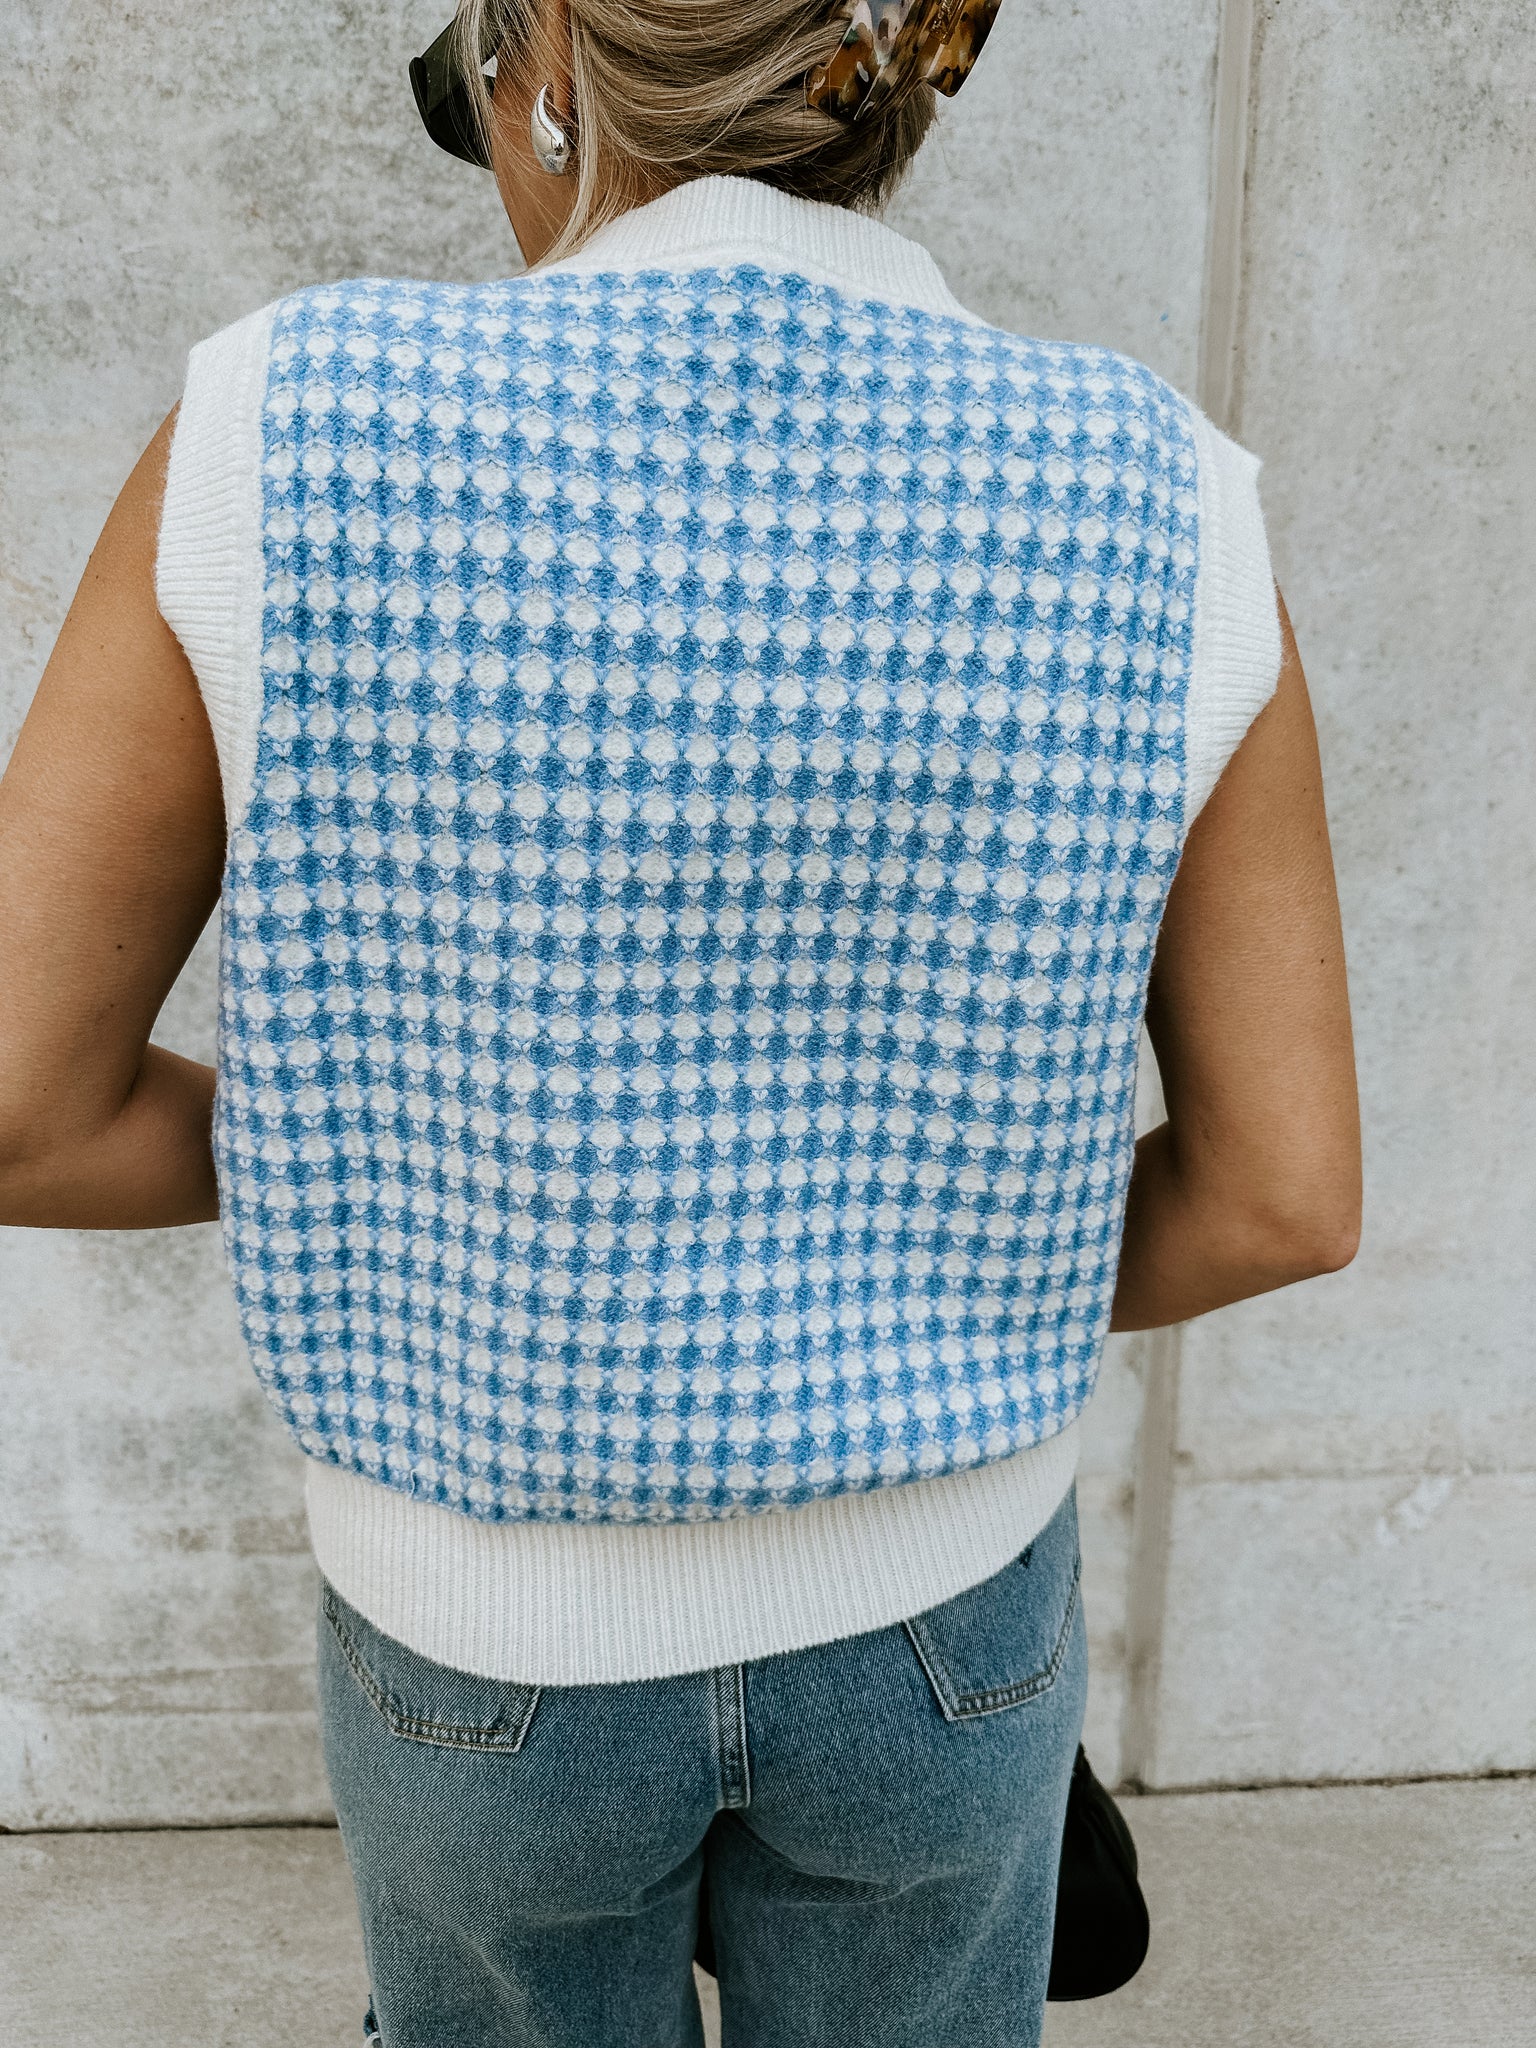 RESTOCK: Blues Houndstooth Sweater Vest